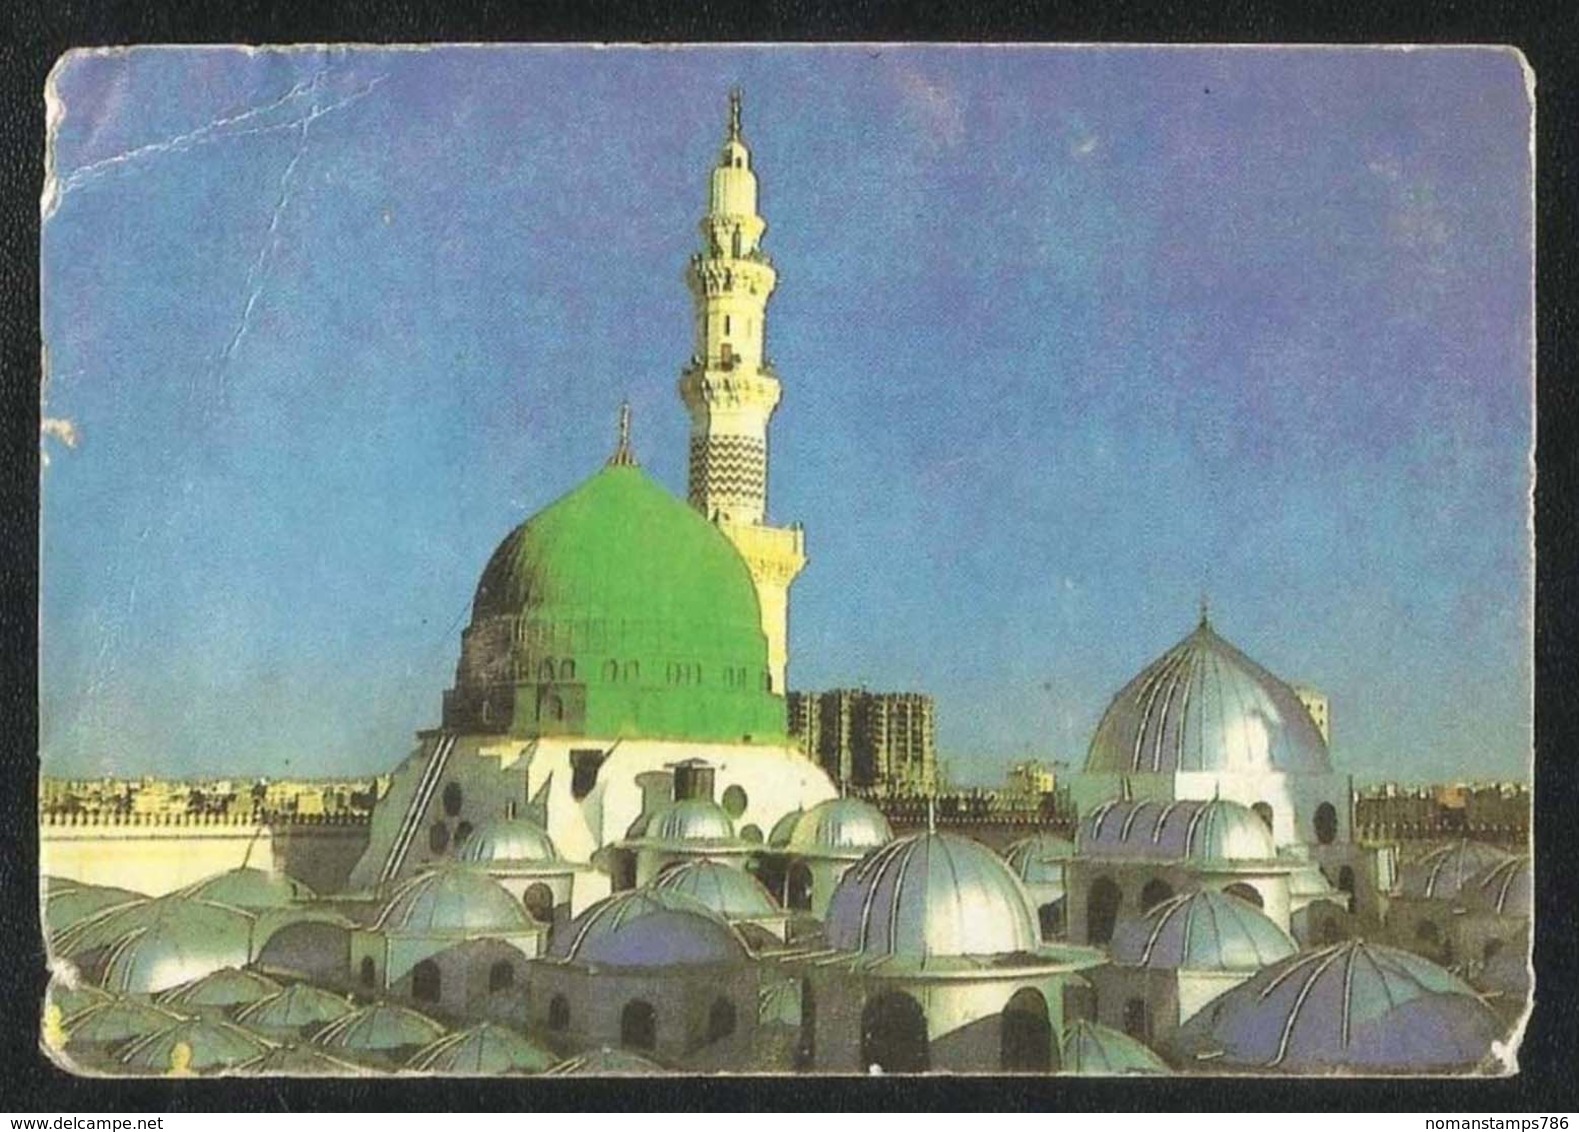 Saudi Arabia Pilgrimage Card Picture Postcard Holy Mosque Medina  Madina View Card  AS PER SCAN - Arabie Saoudite